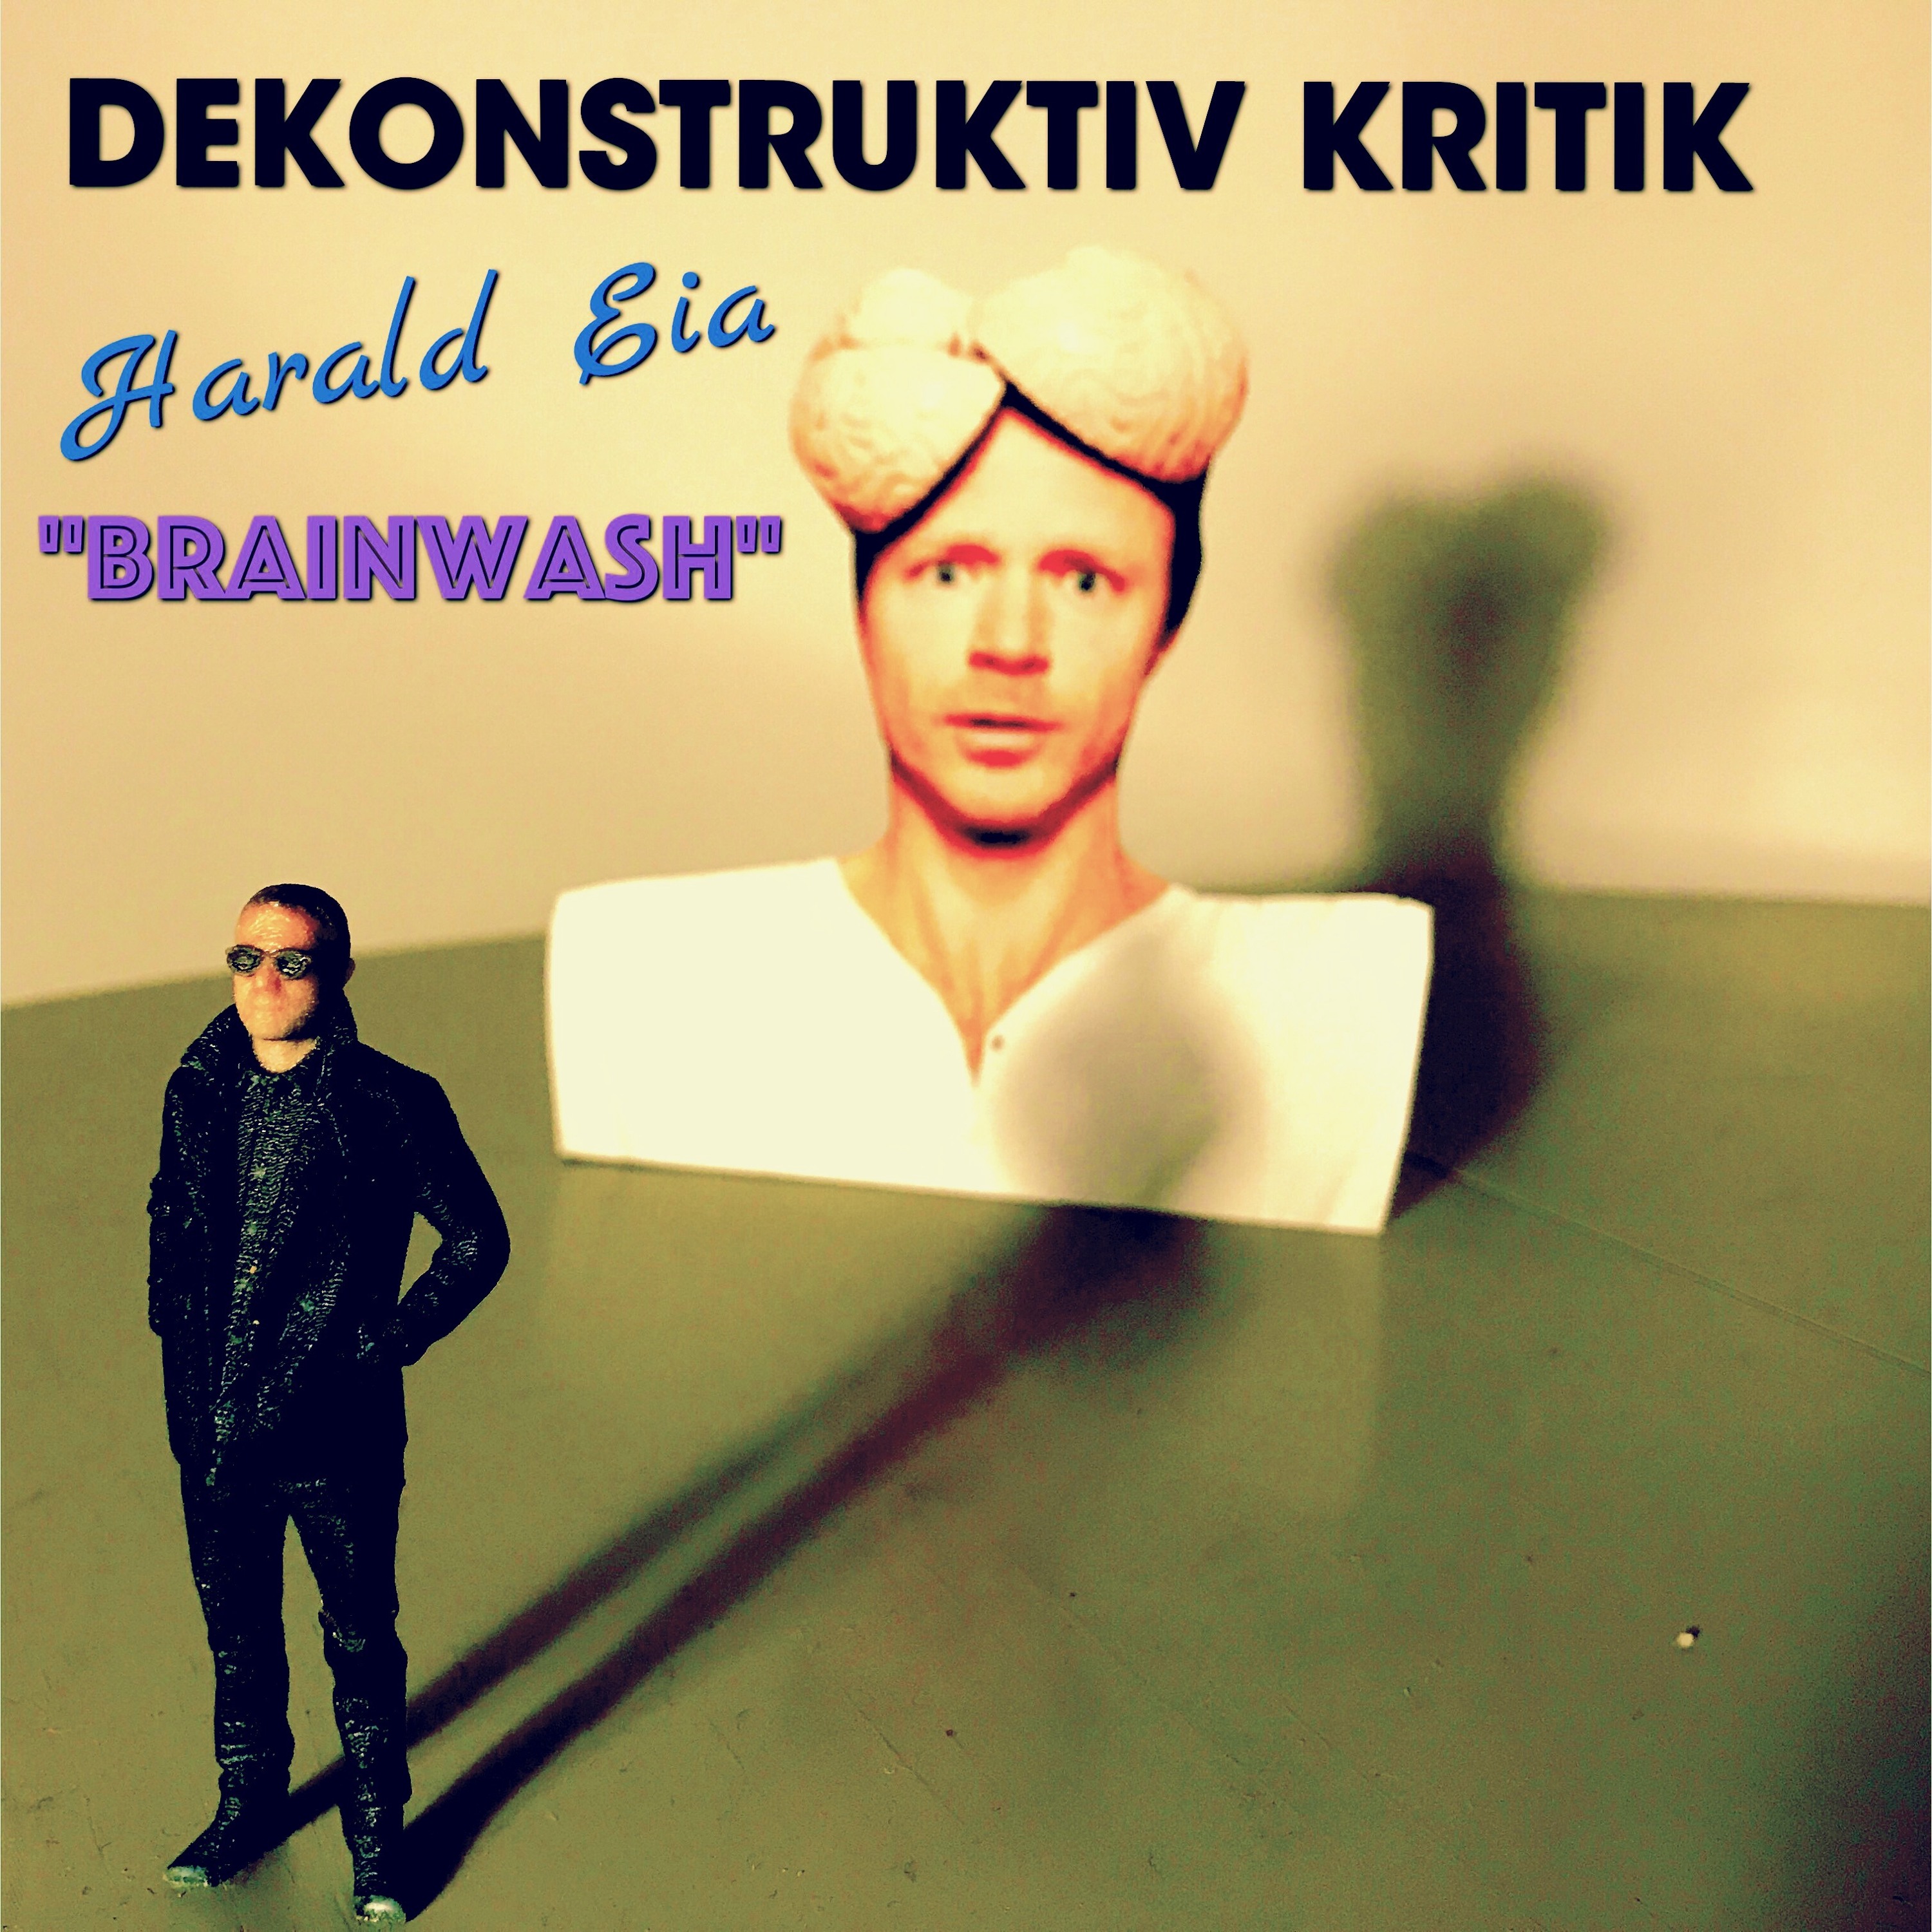 6.0 Brainwashed in Norwegian w. Harald Eia